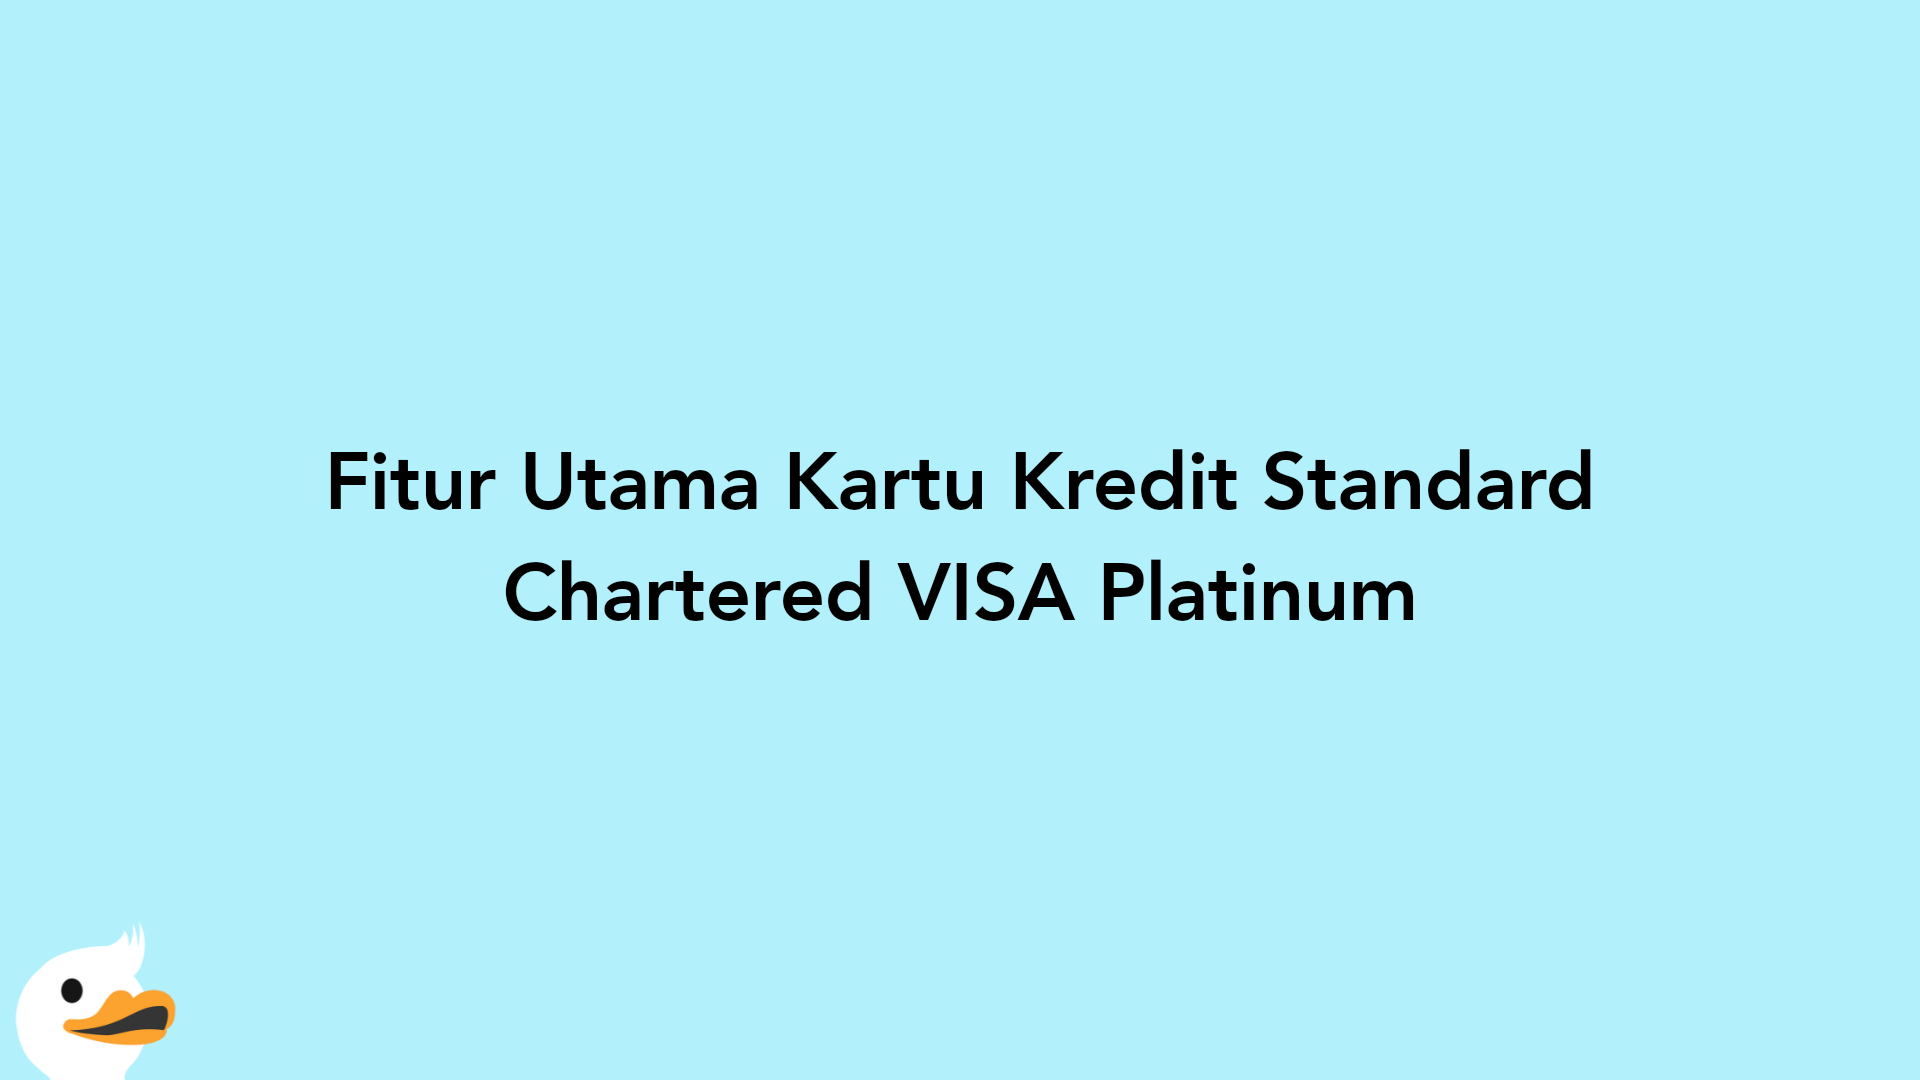 Fitur Utama Kartu Kredit Standard Chartered VISA Platinum